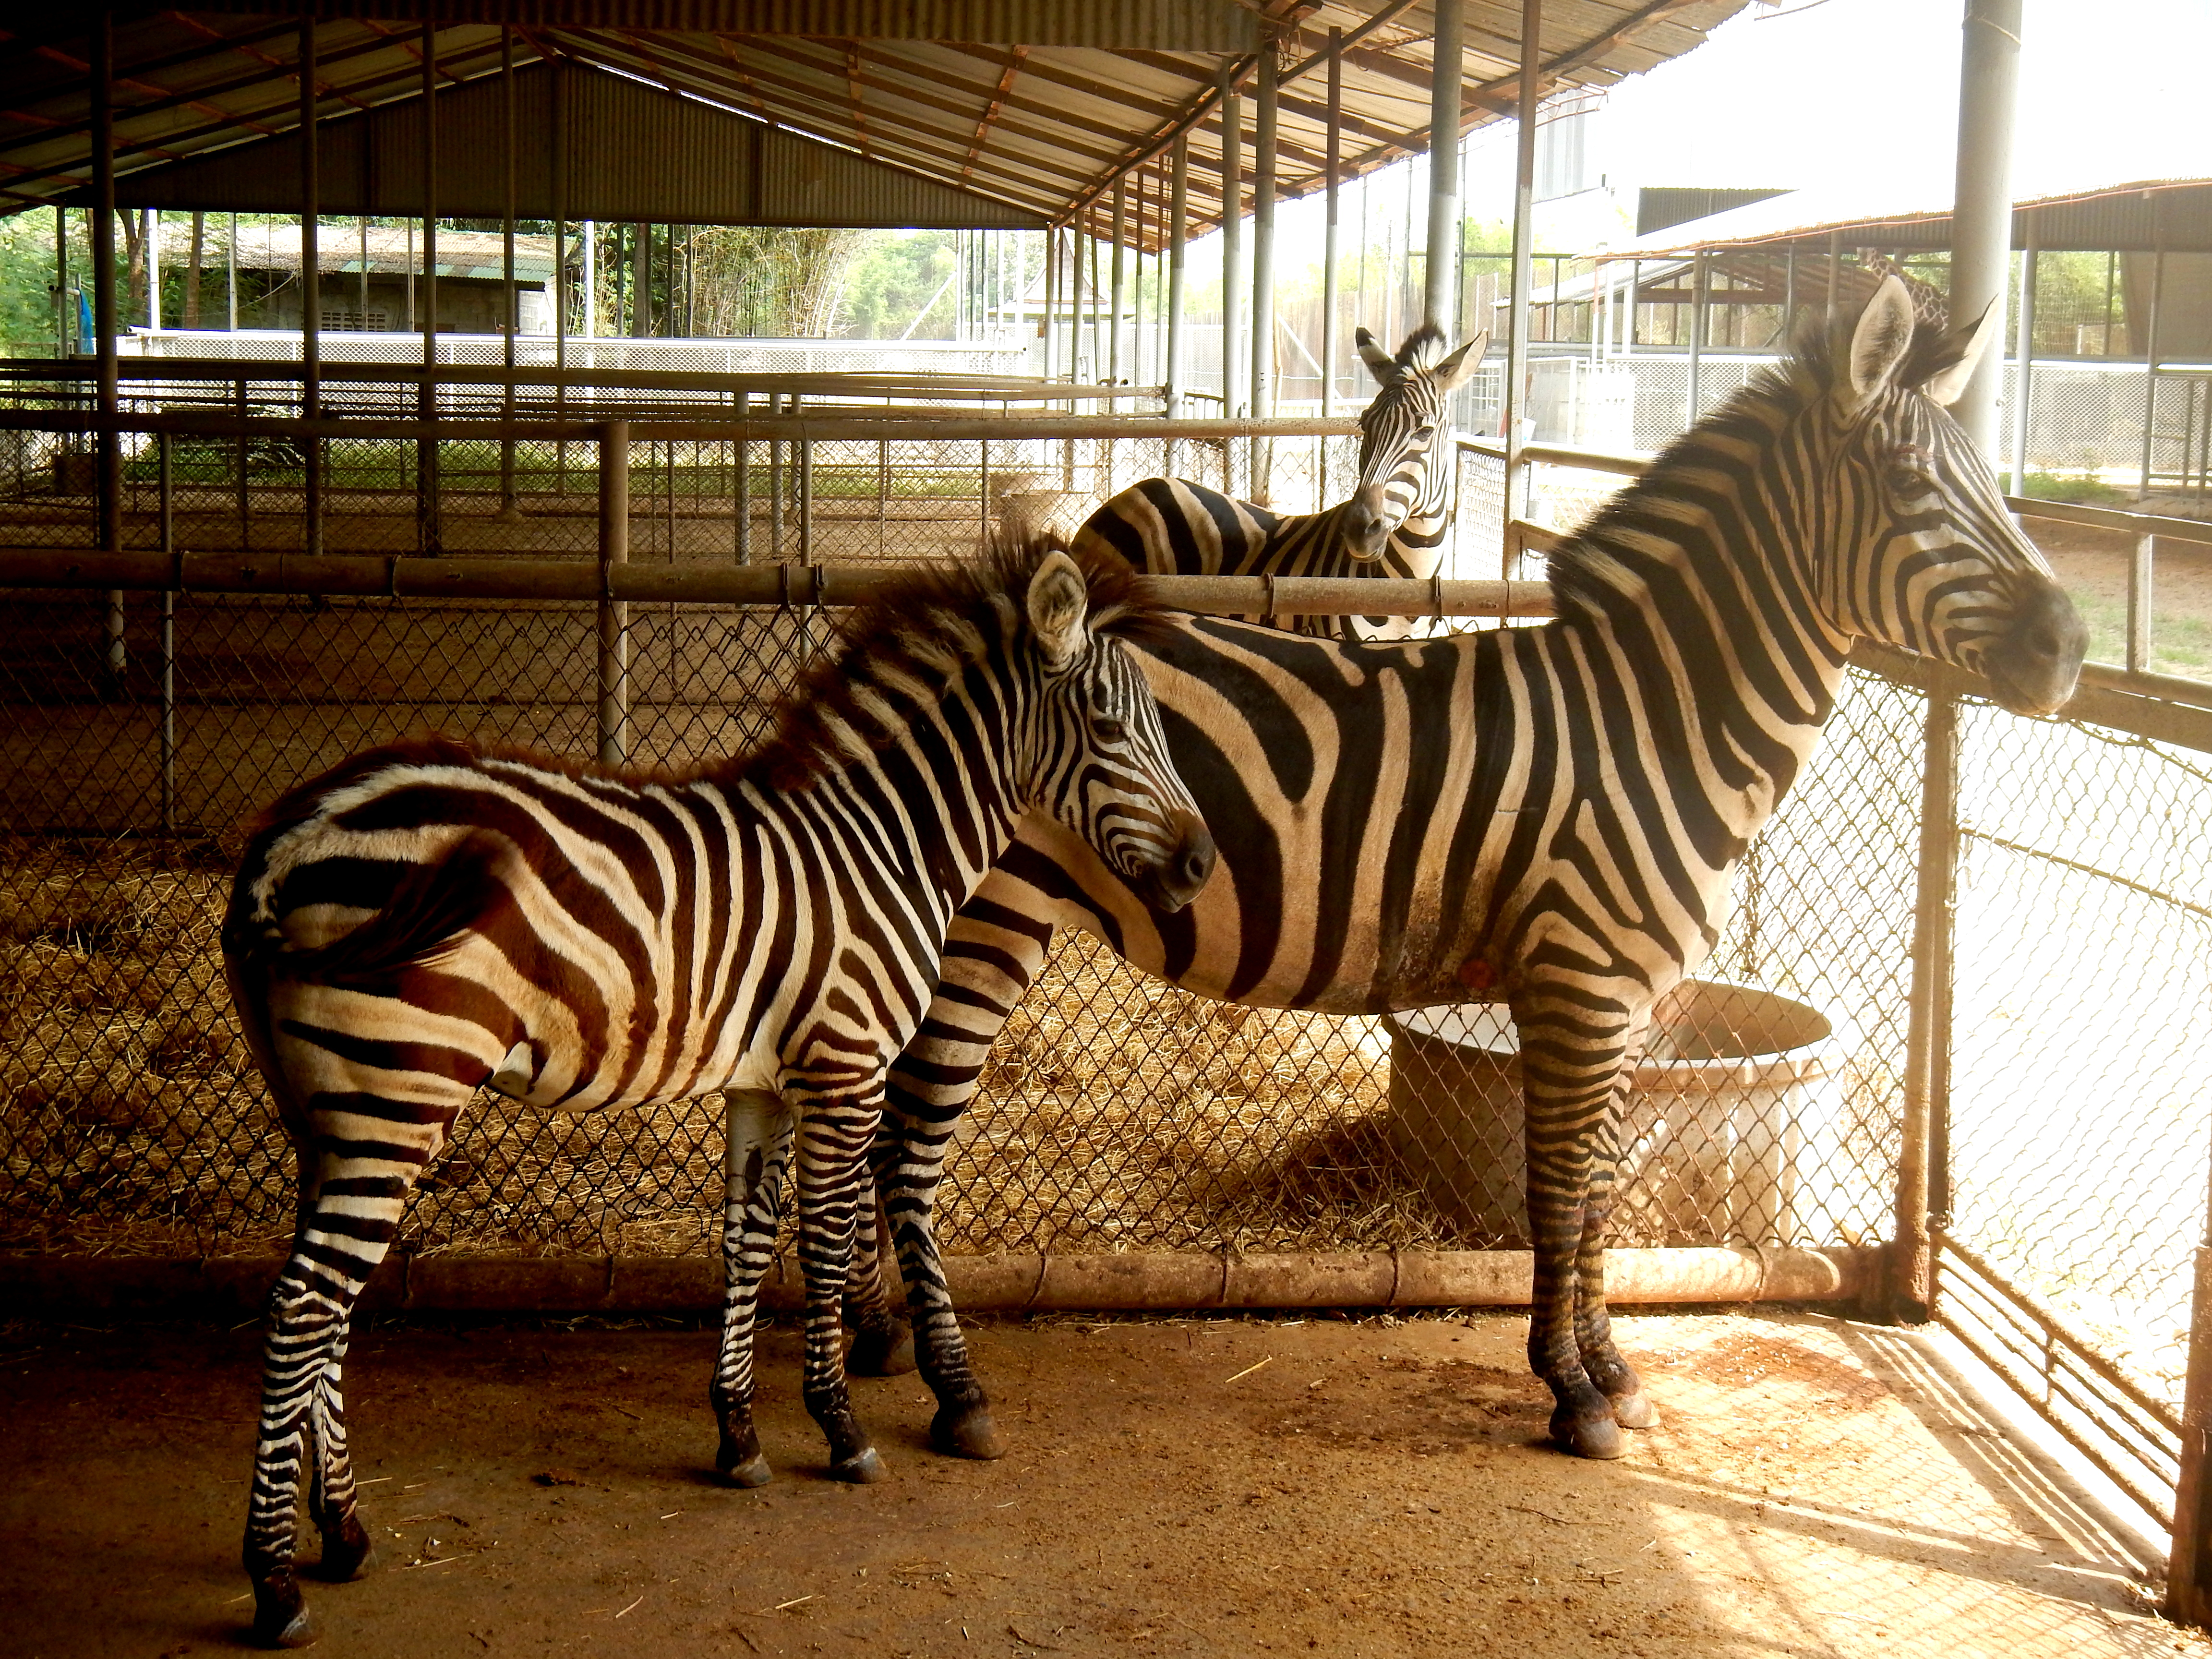 Zebras at the Safari Park Zoo, Kanchanaburi, Thailand